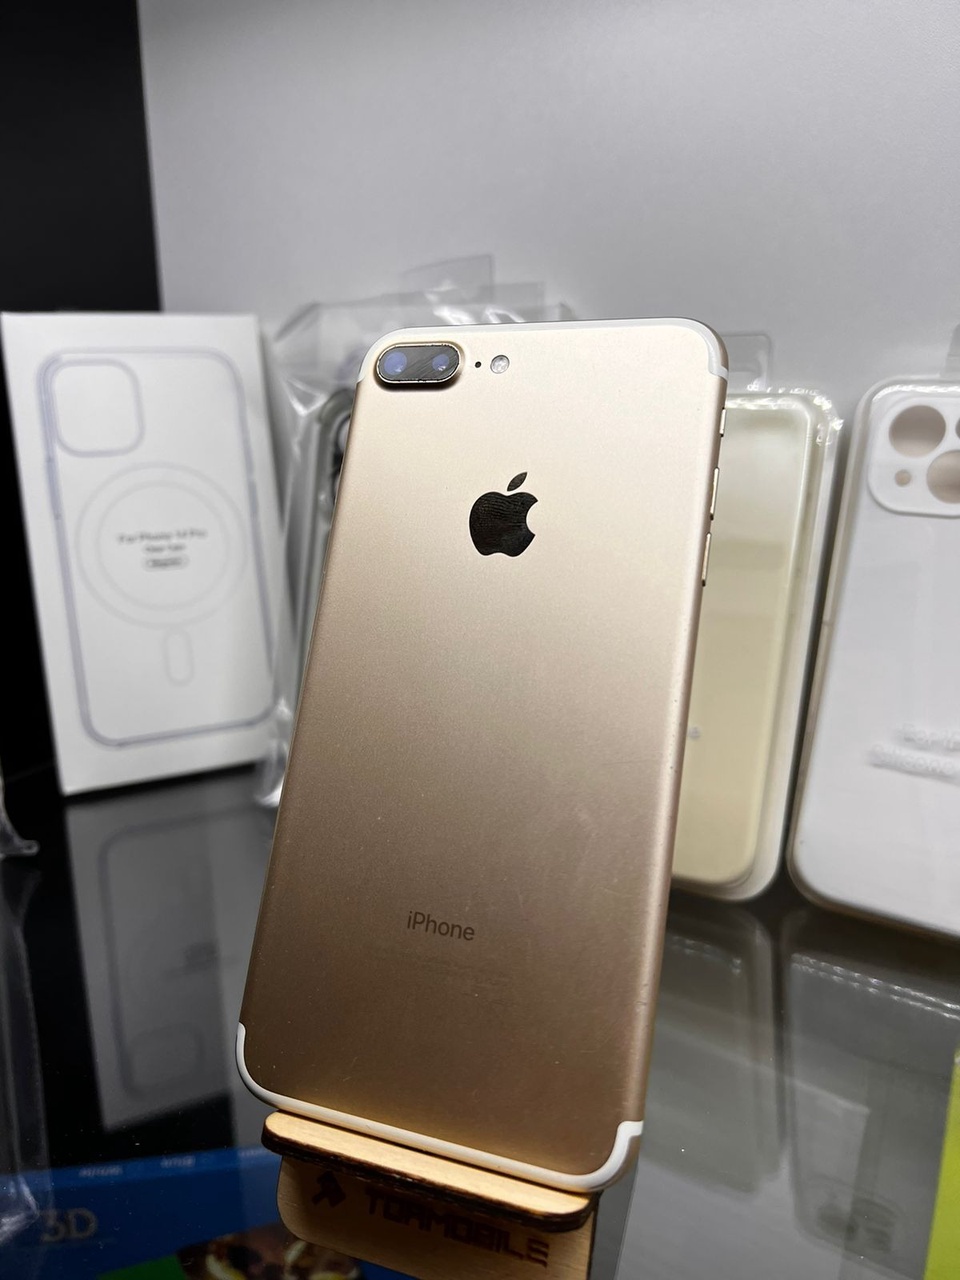 Apple iPhone 7 Plus - 11 500 ₽, заказать онлайн.